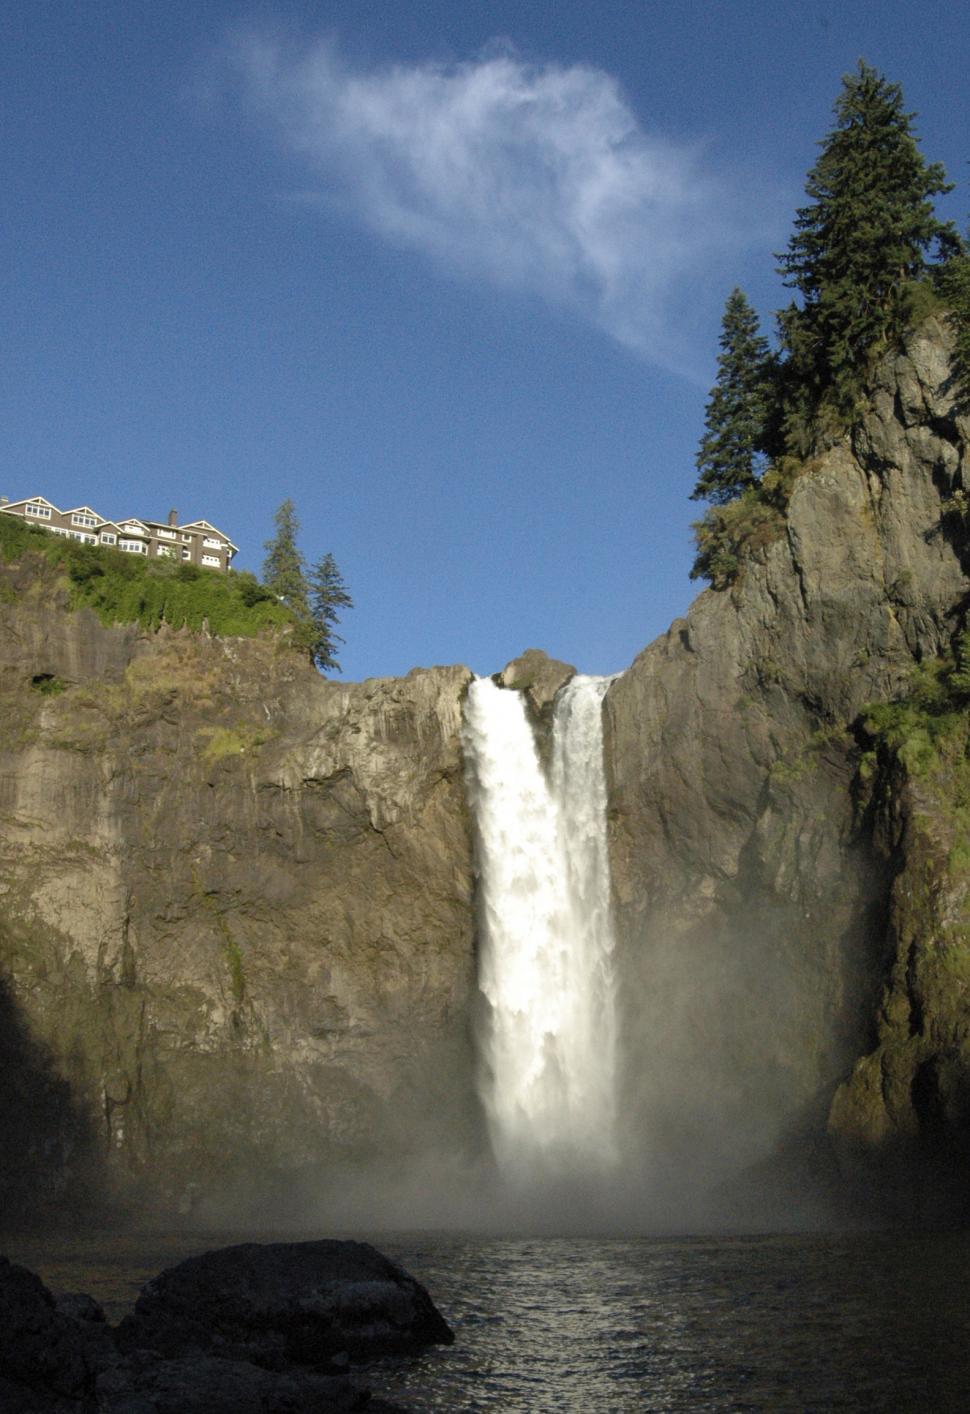 Free Image of Snoqualmie Falls, Washington 